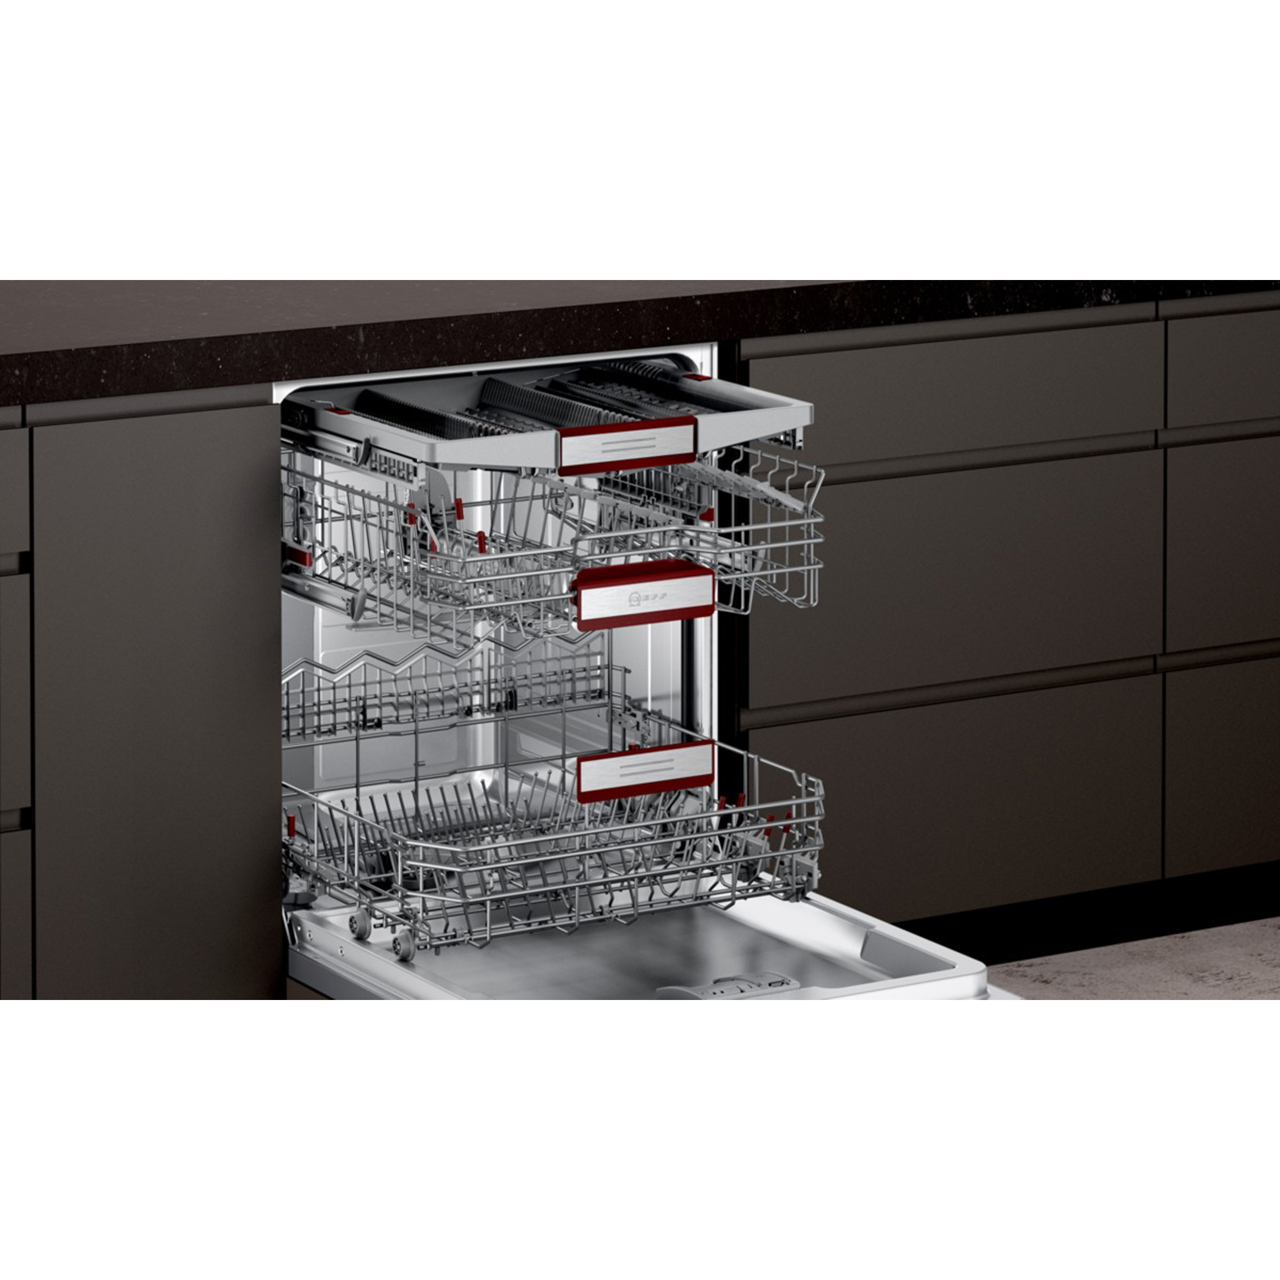 built in dishwasher reviews uk